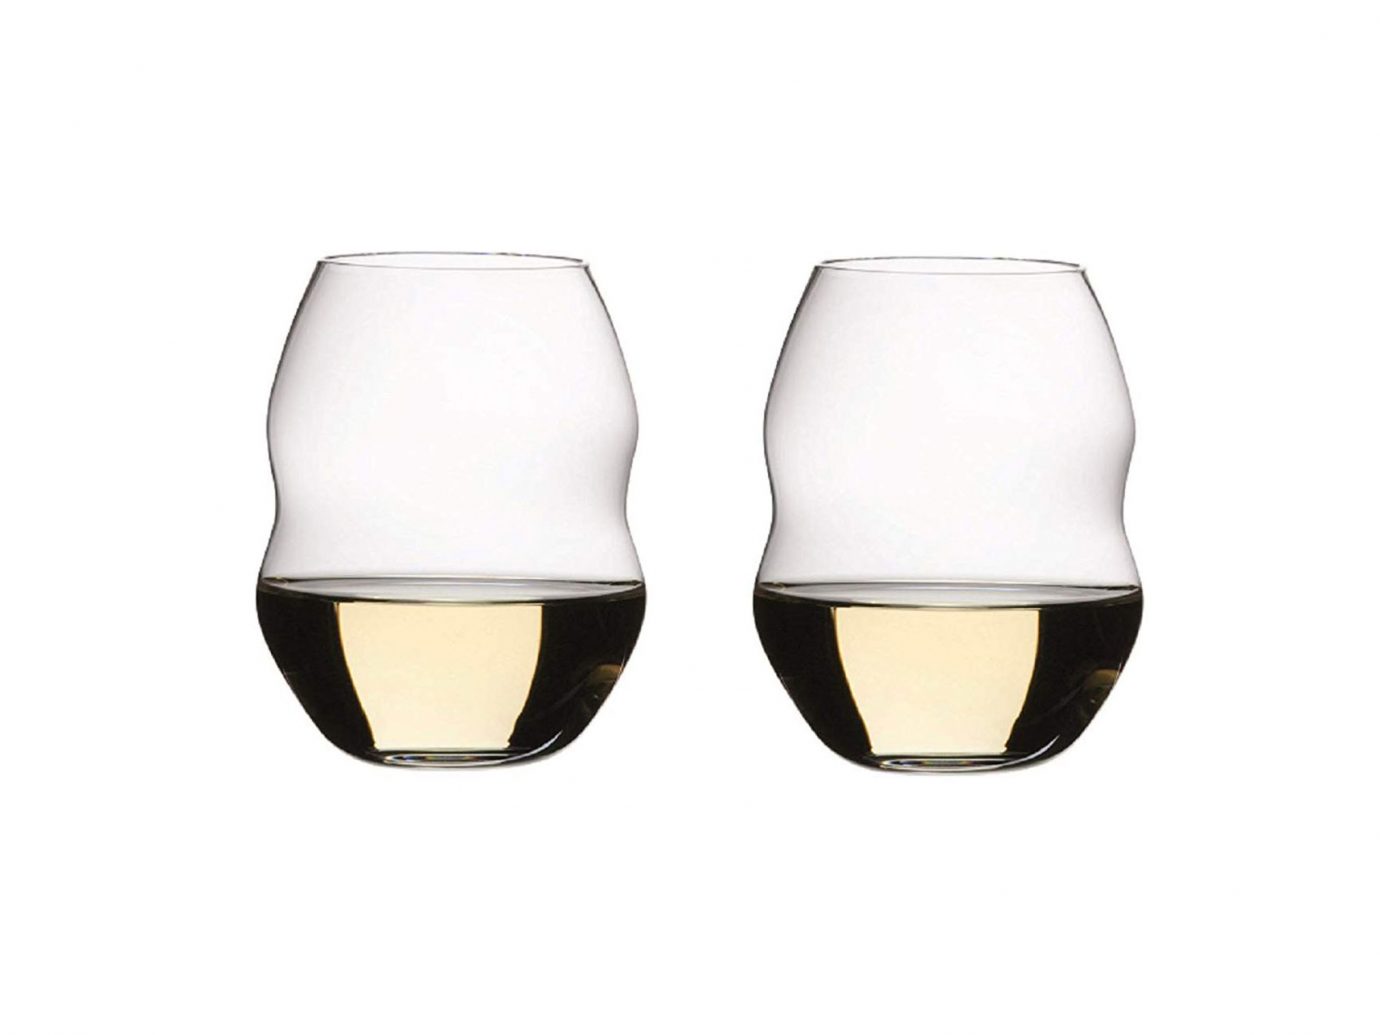 Buy Riedel Swirl White Wine Glasses on Amazon